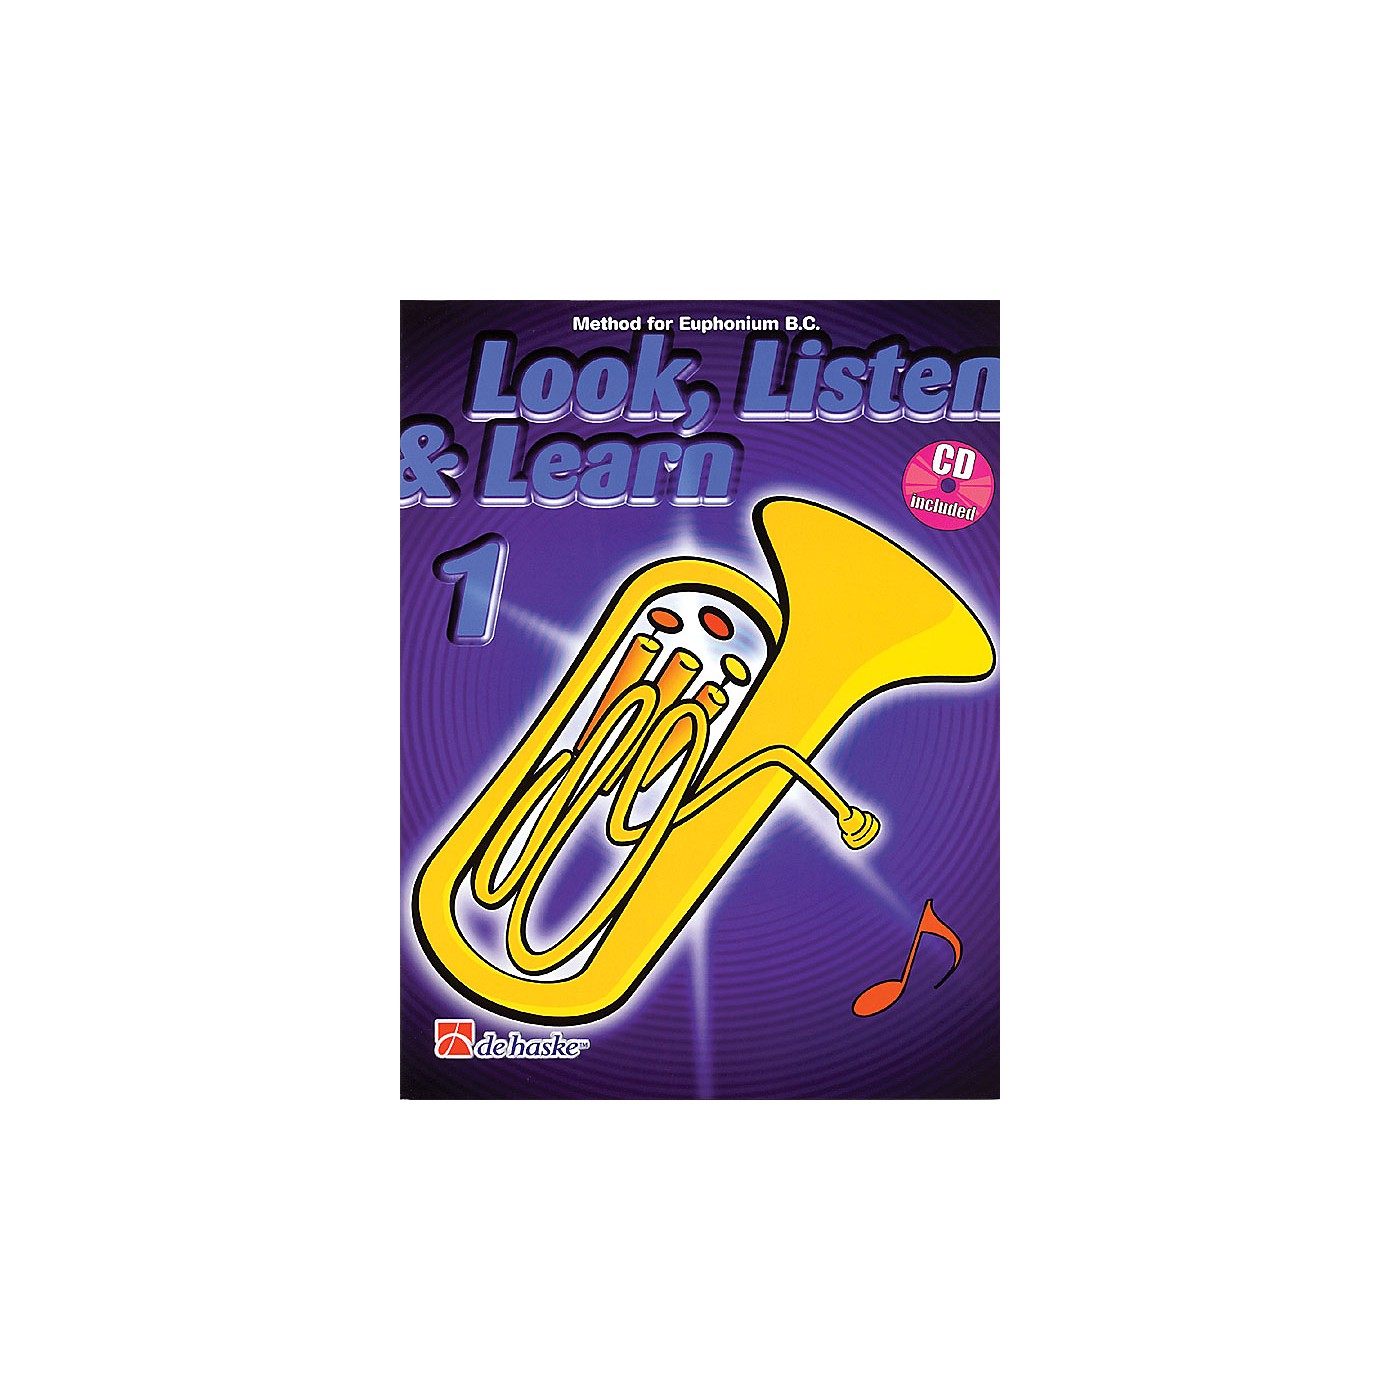 Hal Leonard Look, Listen & Learn - Method Book Part 1 (Euphonium (B.C.)) De Haske Play-Along Book Series thumbnail